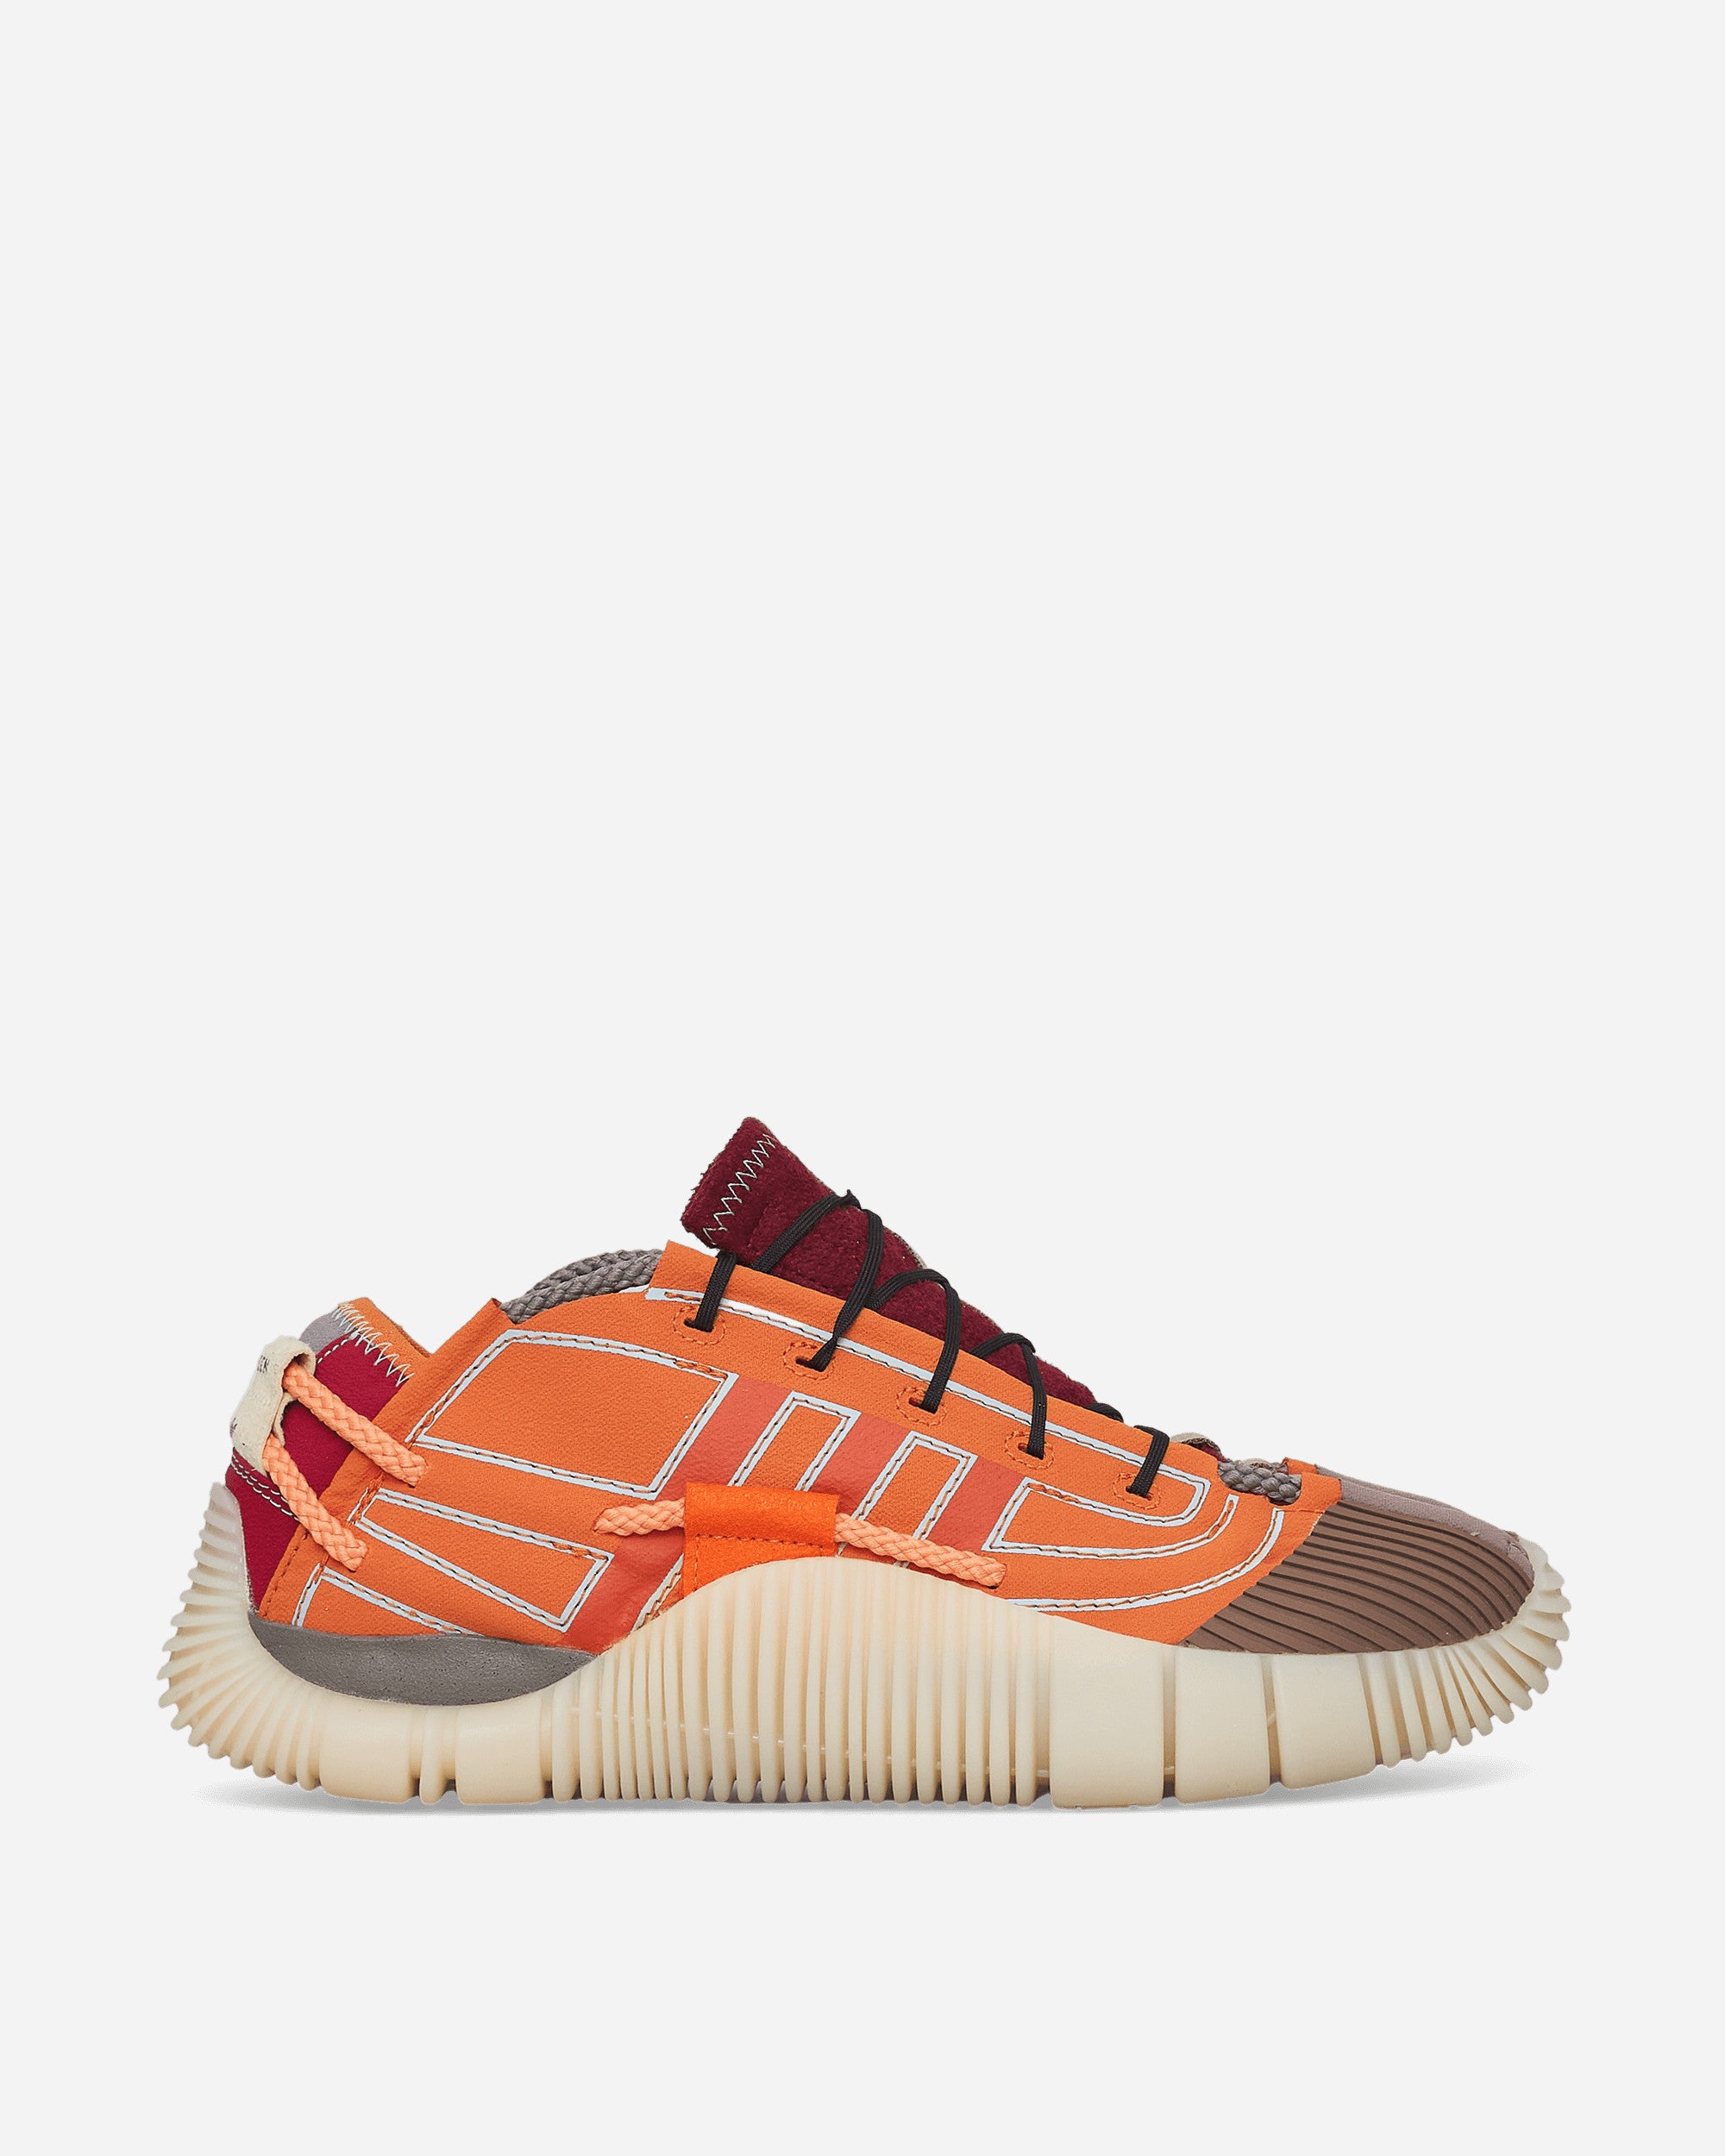 Adidas Consortium Craig Green Scuba Phormar Sneakers Orange/glowblue ModeSens